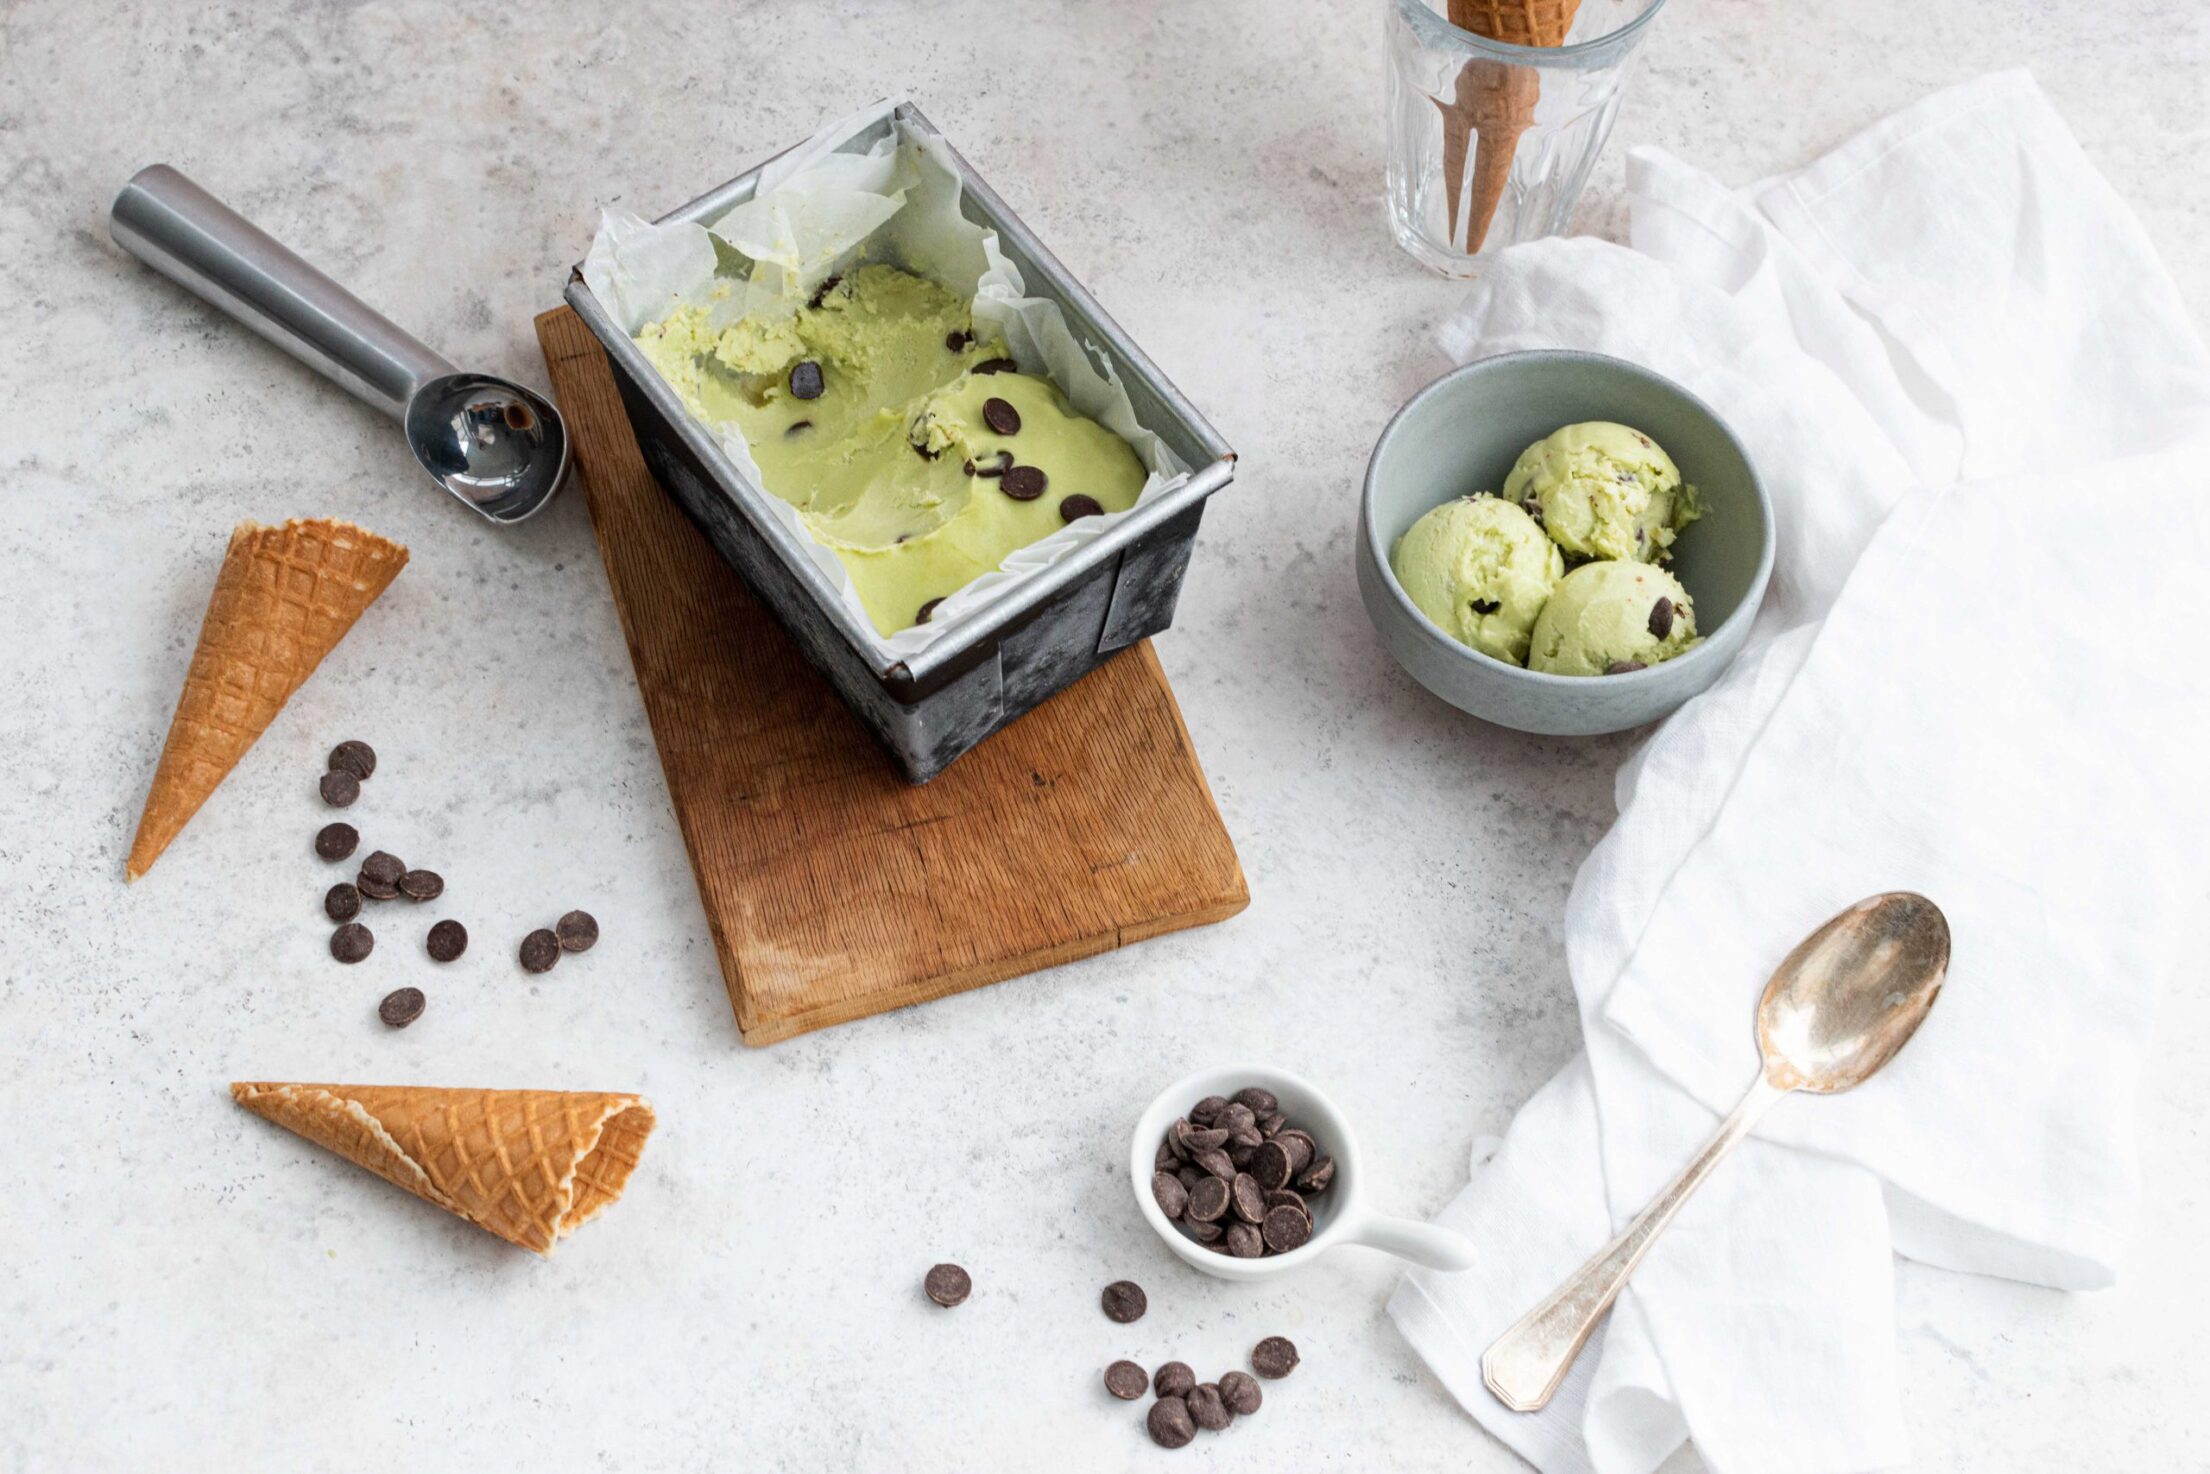 Mint chocolate chip ijs maken zonder ijsmachine - My Food